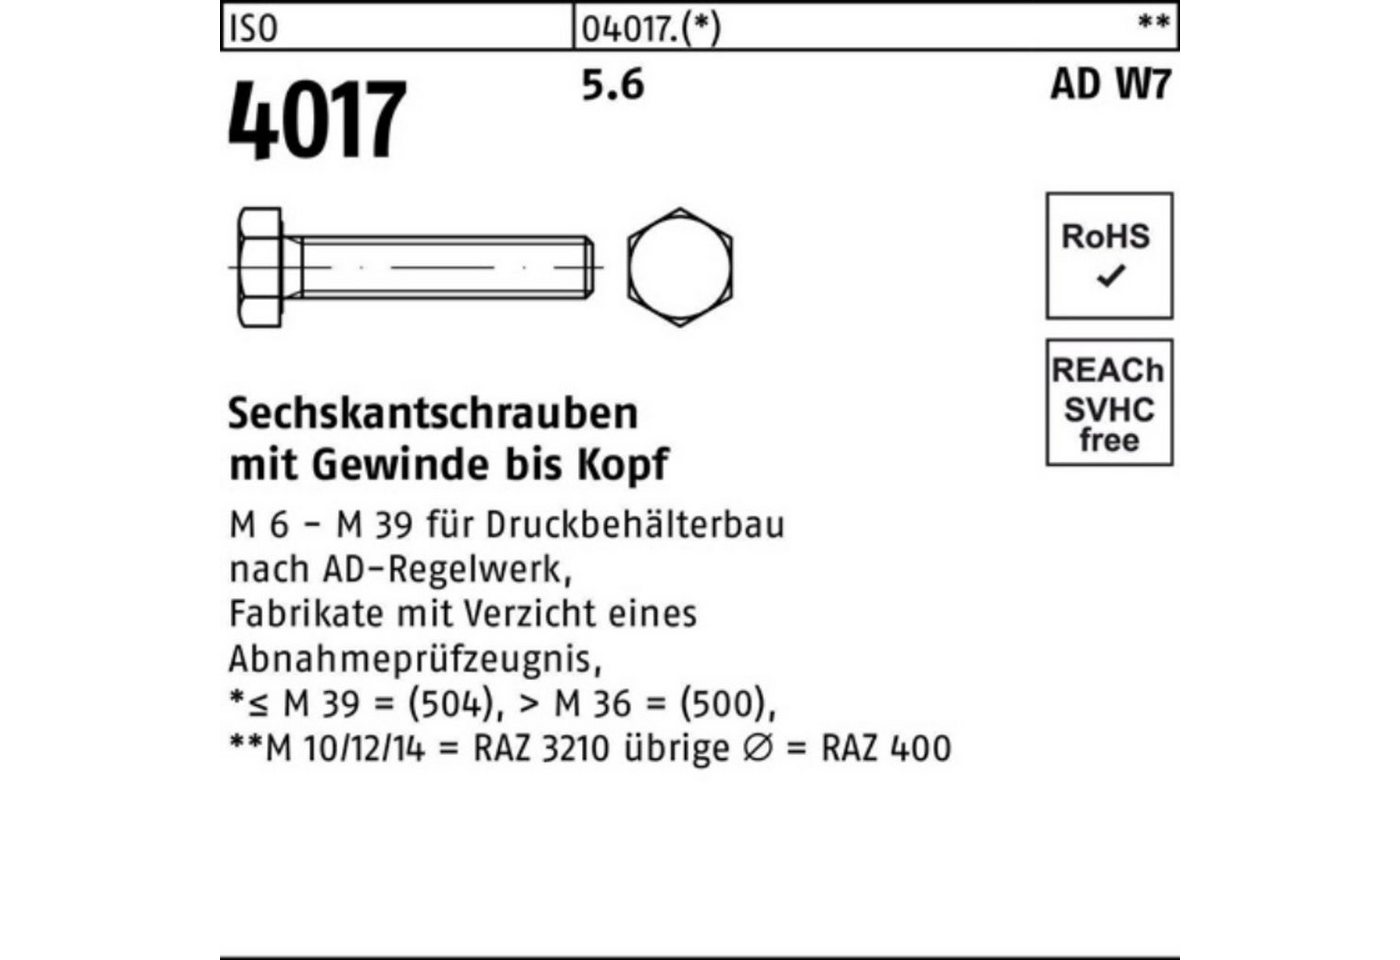 Bufab Sechskantschraube 200er Pack Sechskantschraube ISO 4017 VG M6x 50 5.6 AD W7 200 Stück I von Bufab